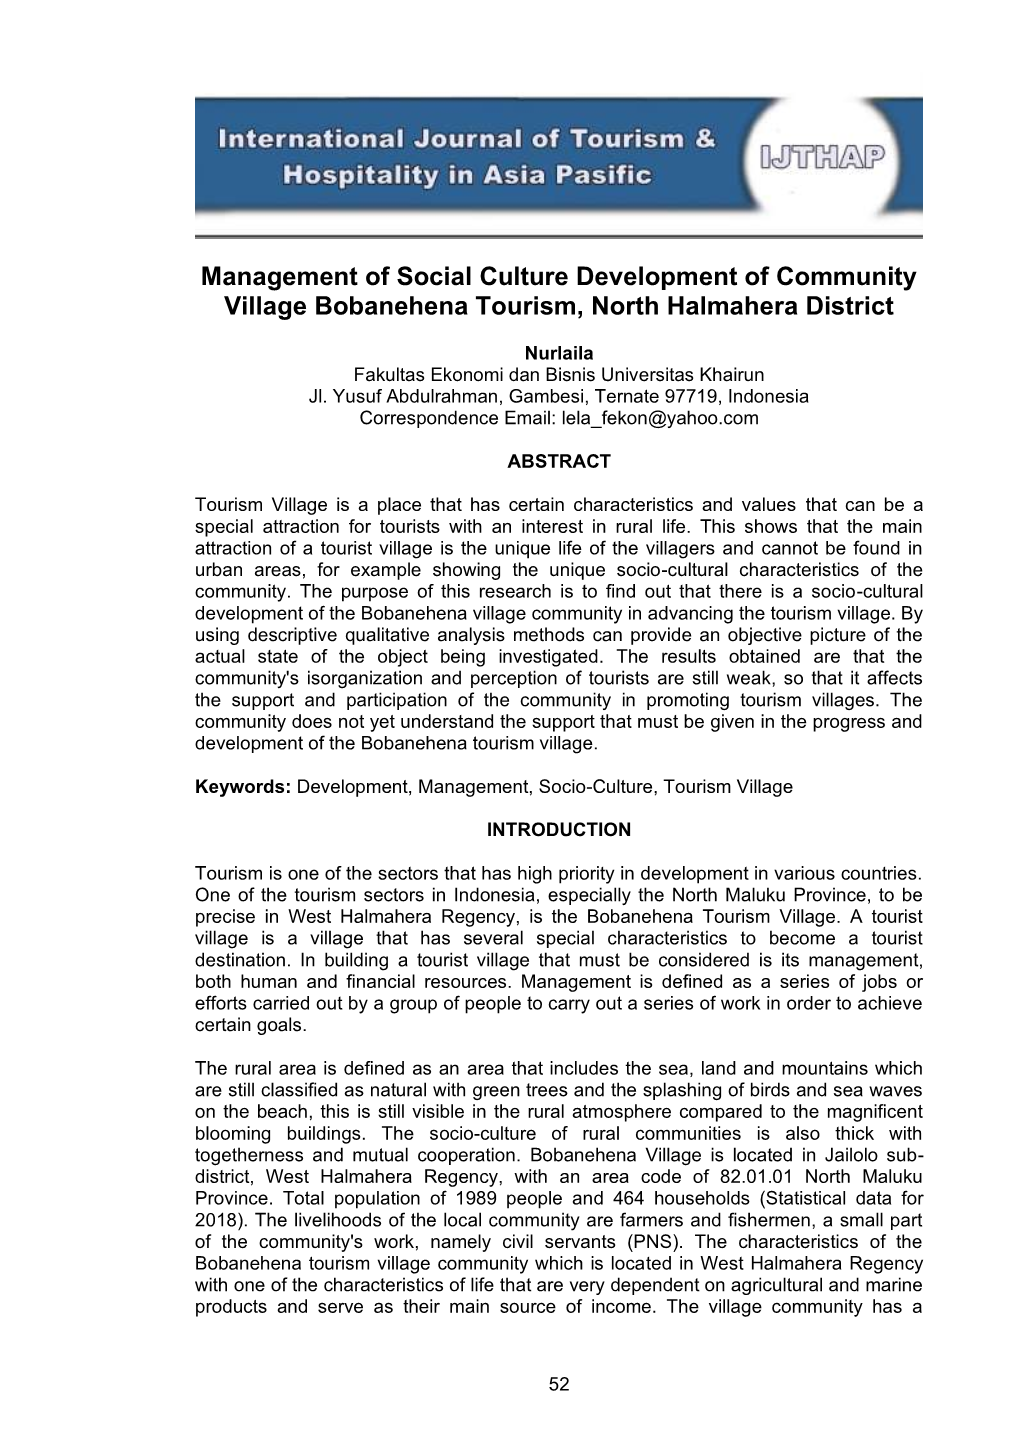 Management of Social Culture Development of Community Village Bobanehena Tourism, North Halmahera District